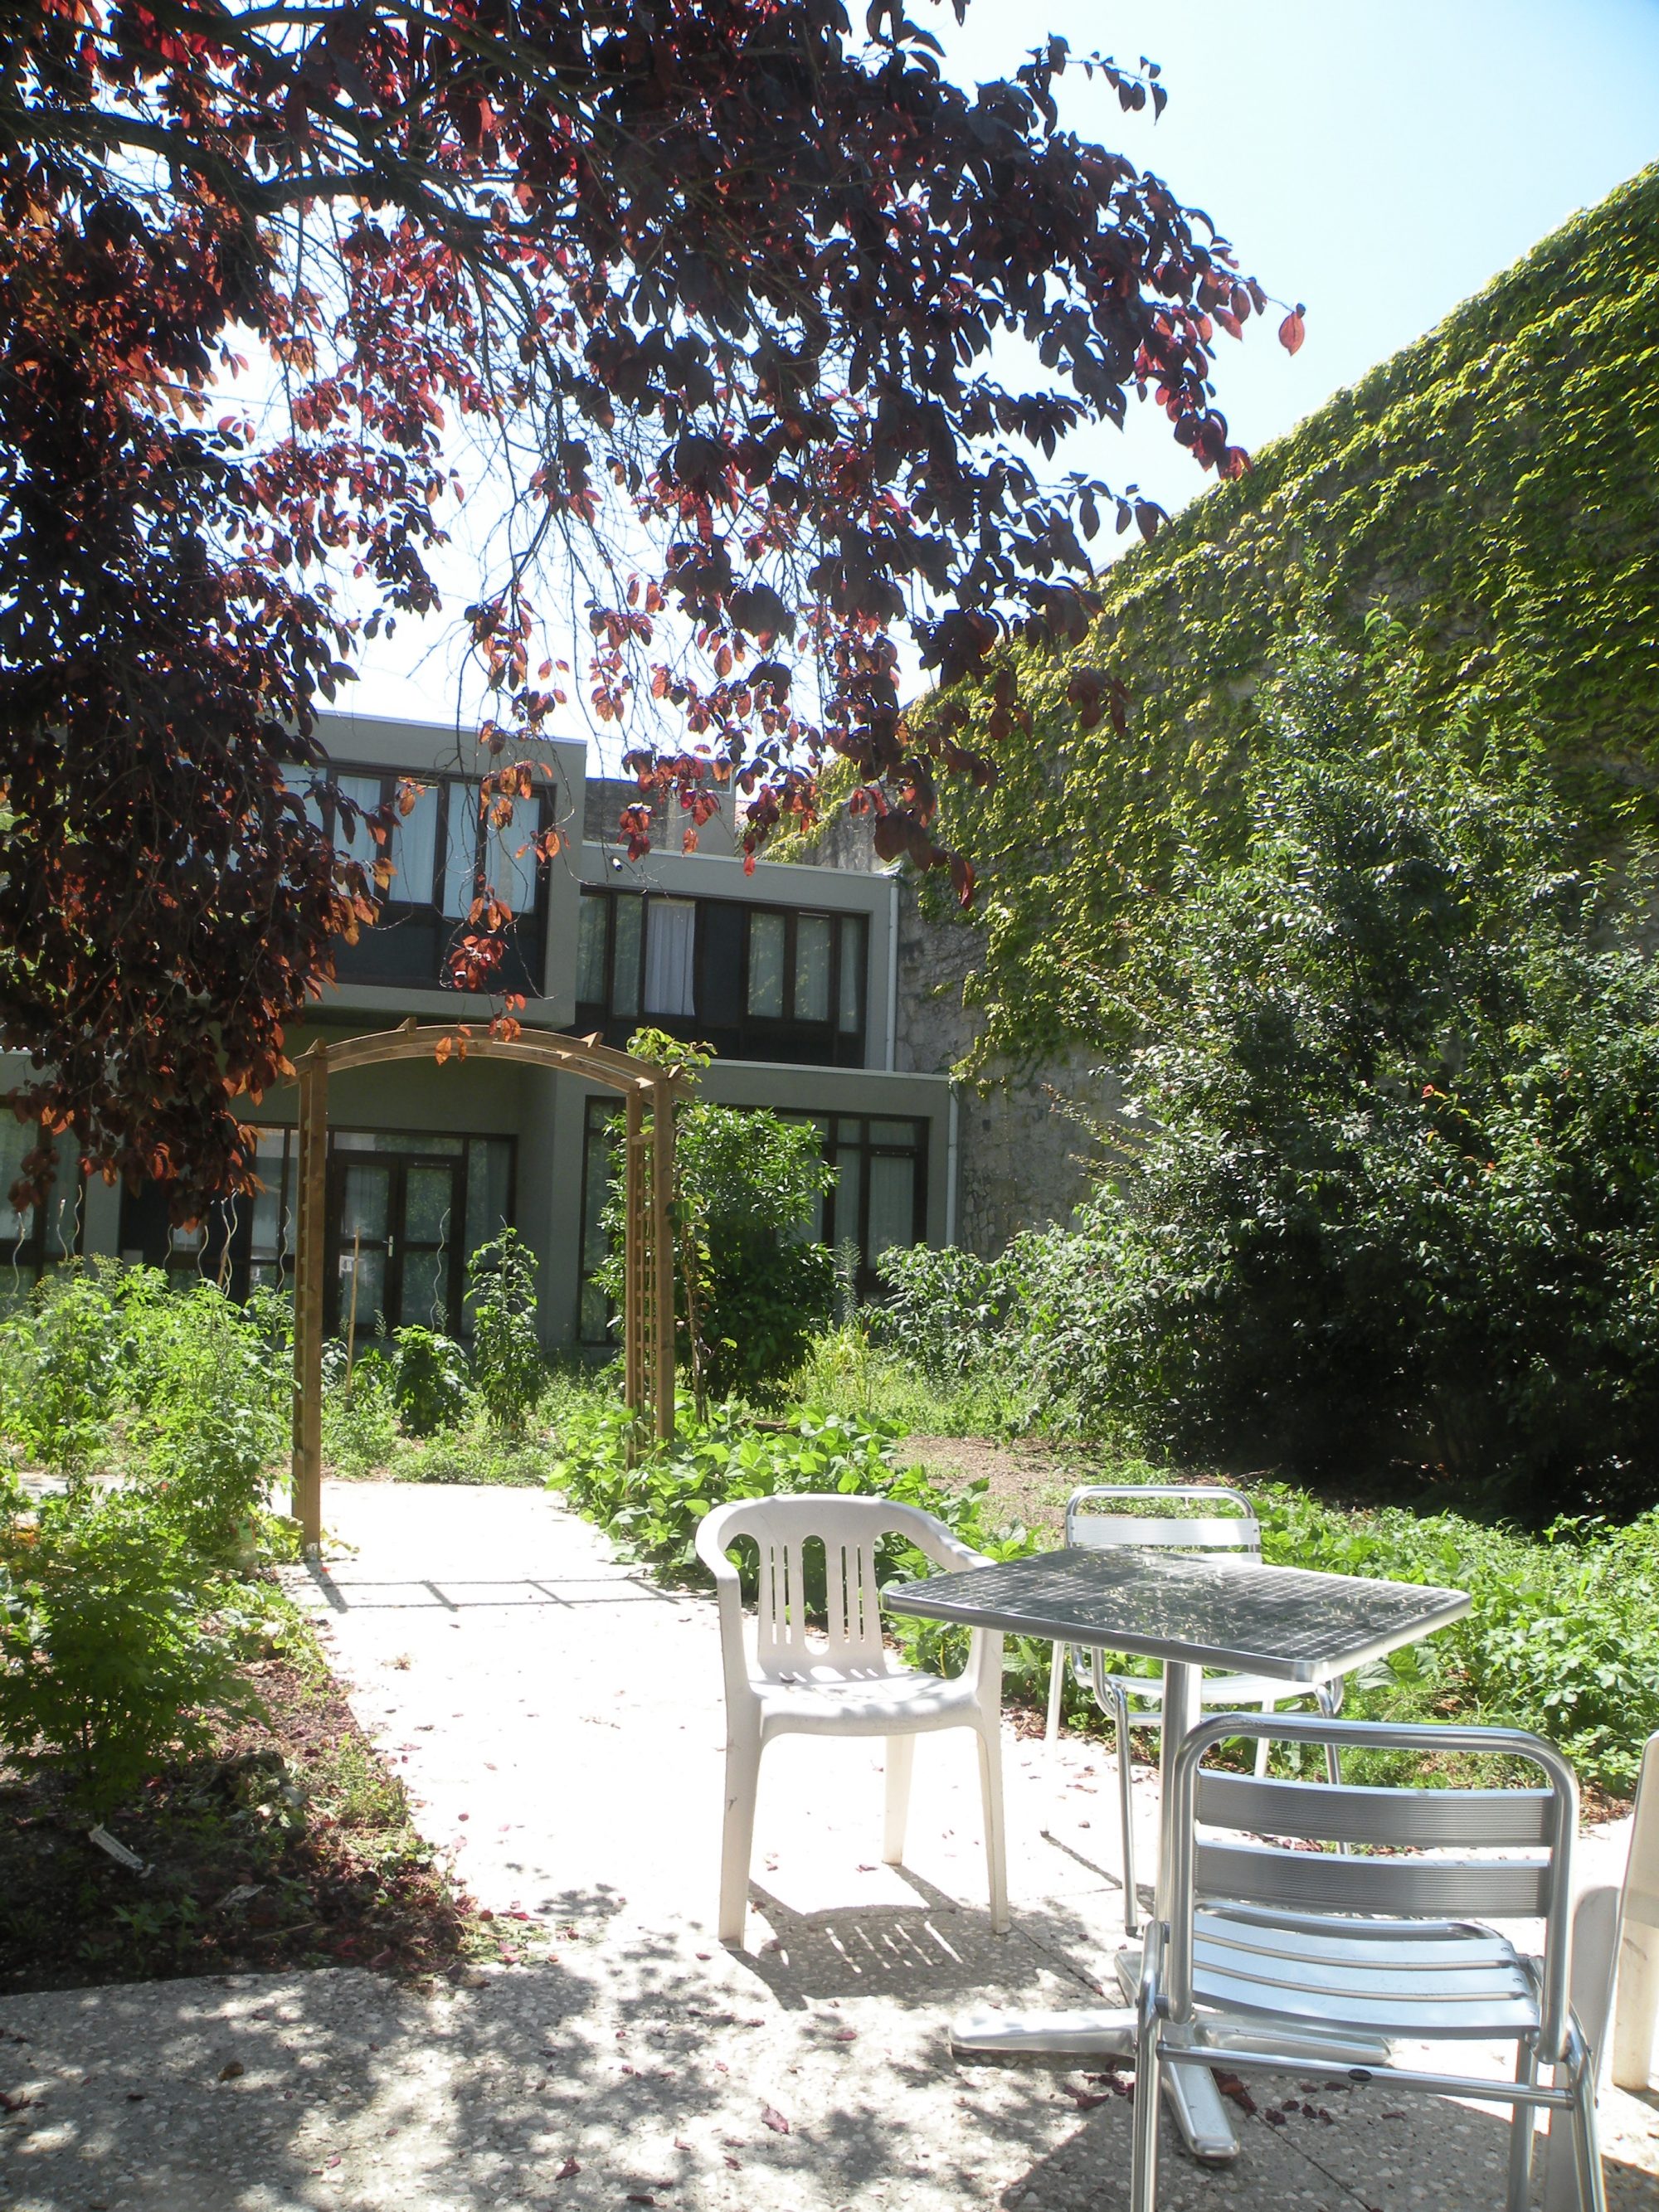 Le jardin de la résidence Rosa-Parks@Habitat Jeunes L'Eveil